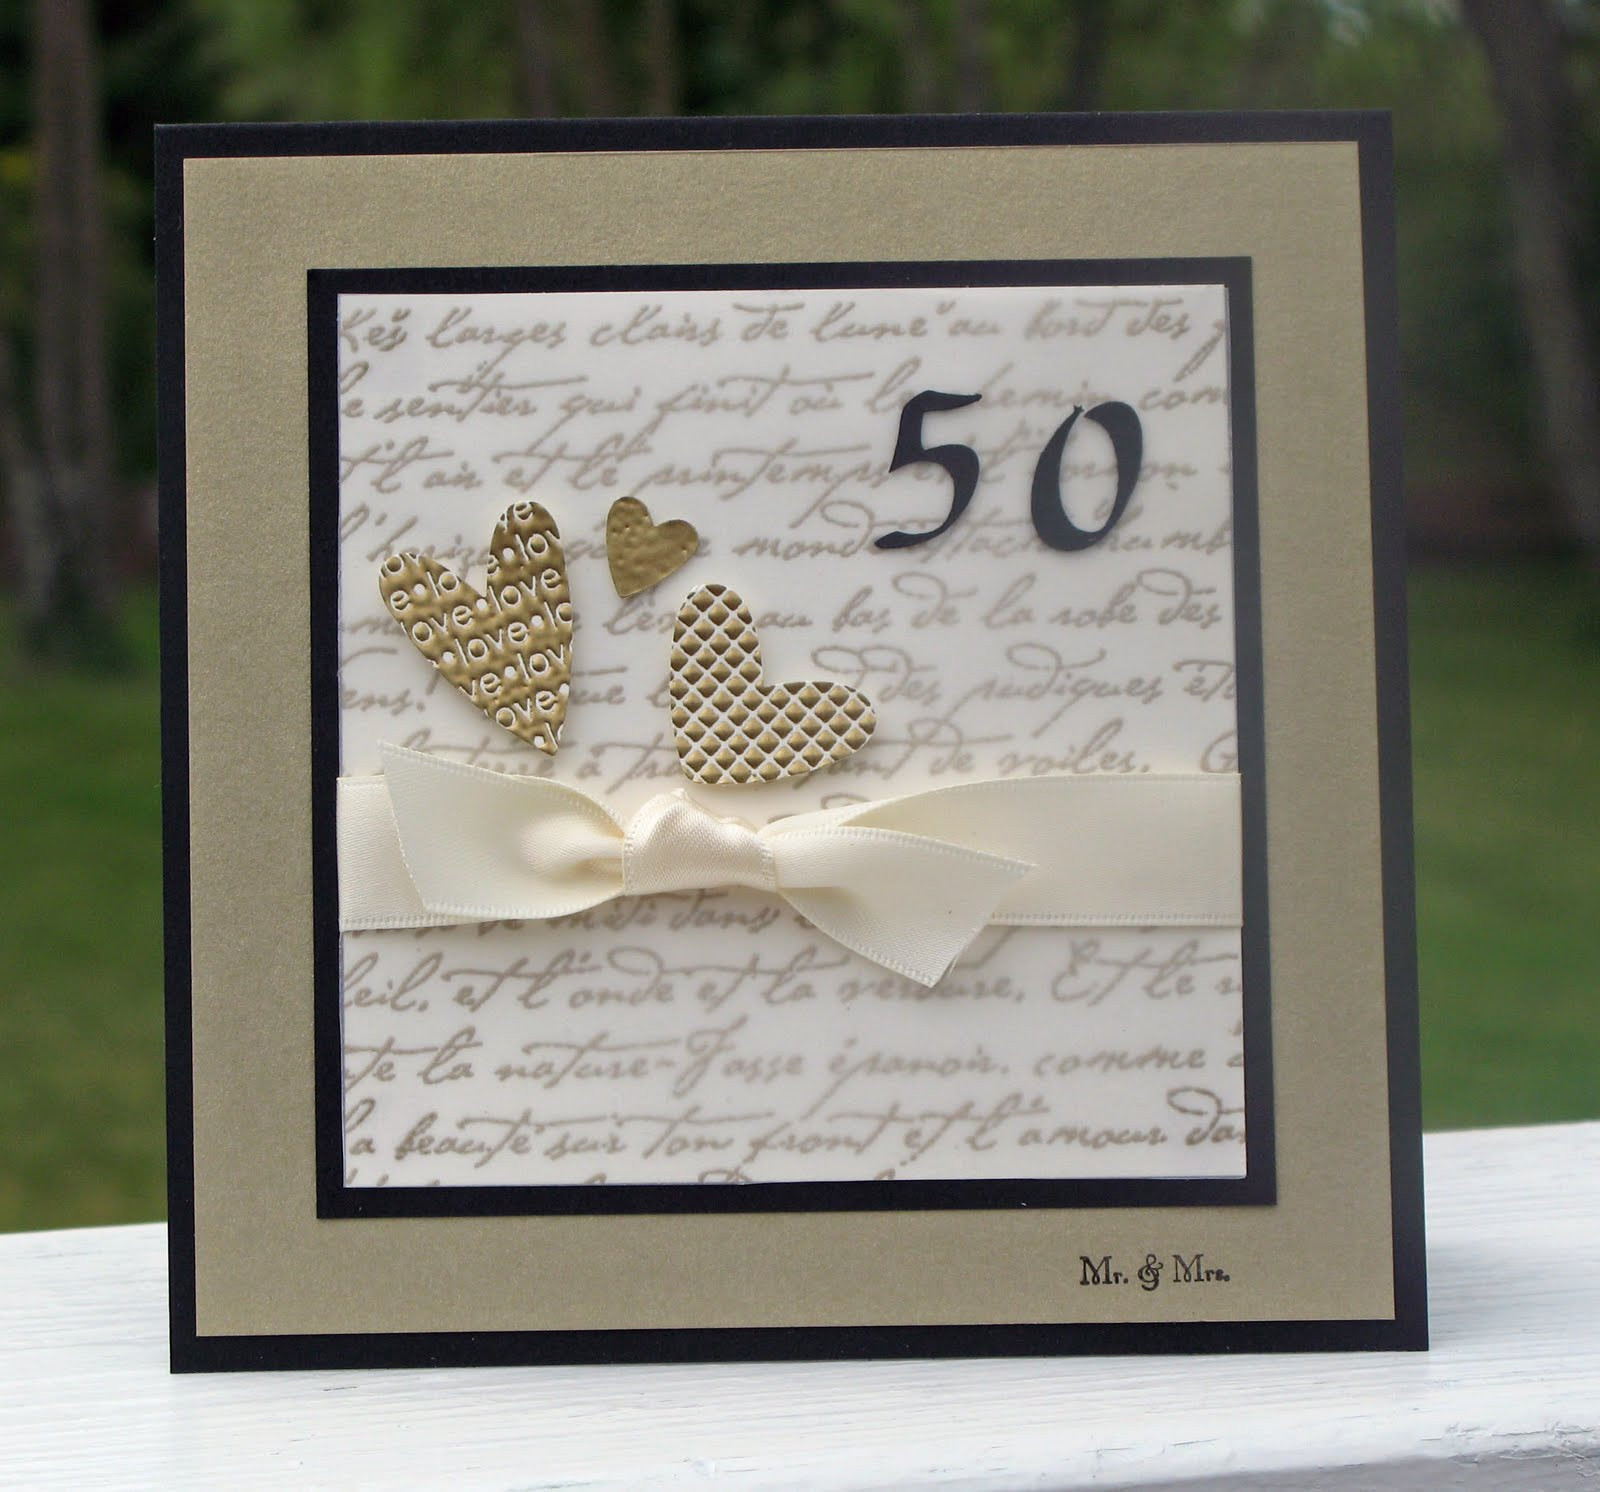 Fifty Wedding Anniversary Gift Ideas
 50th Wedding Anniversary ideas on Pinterest